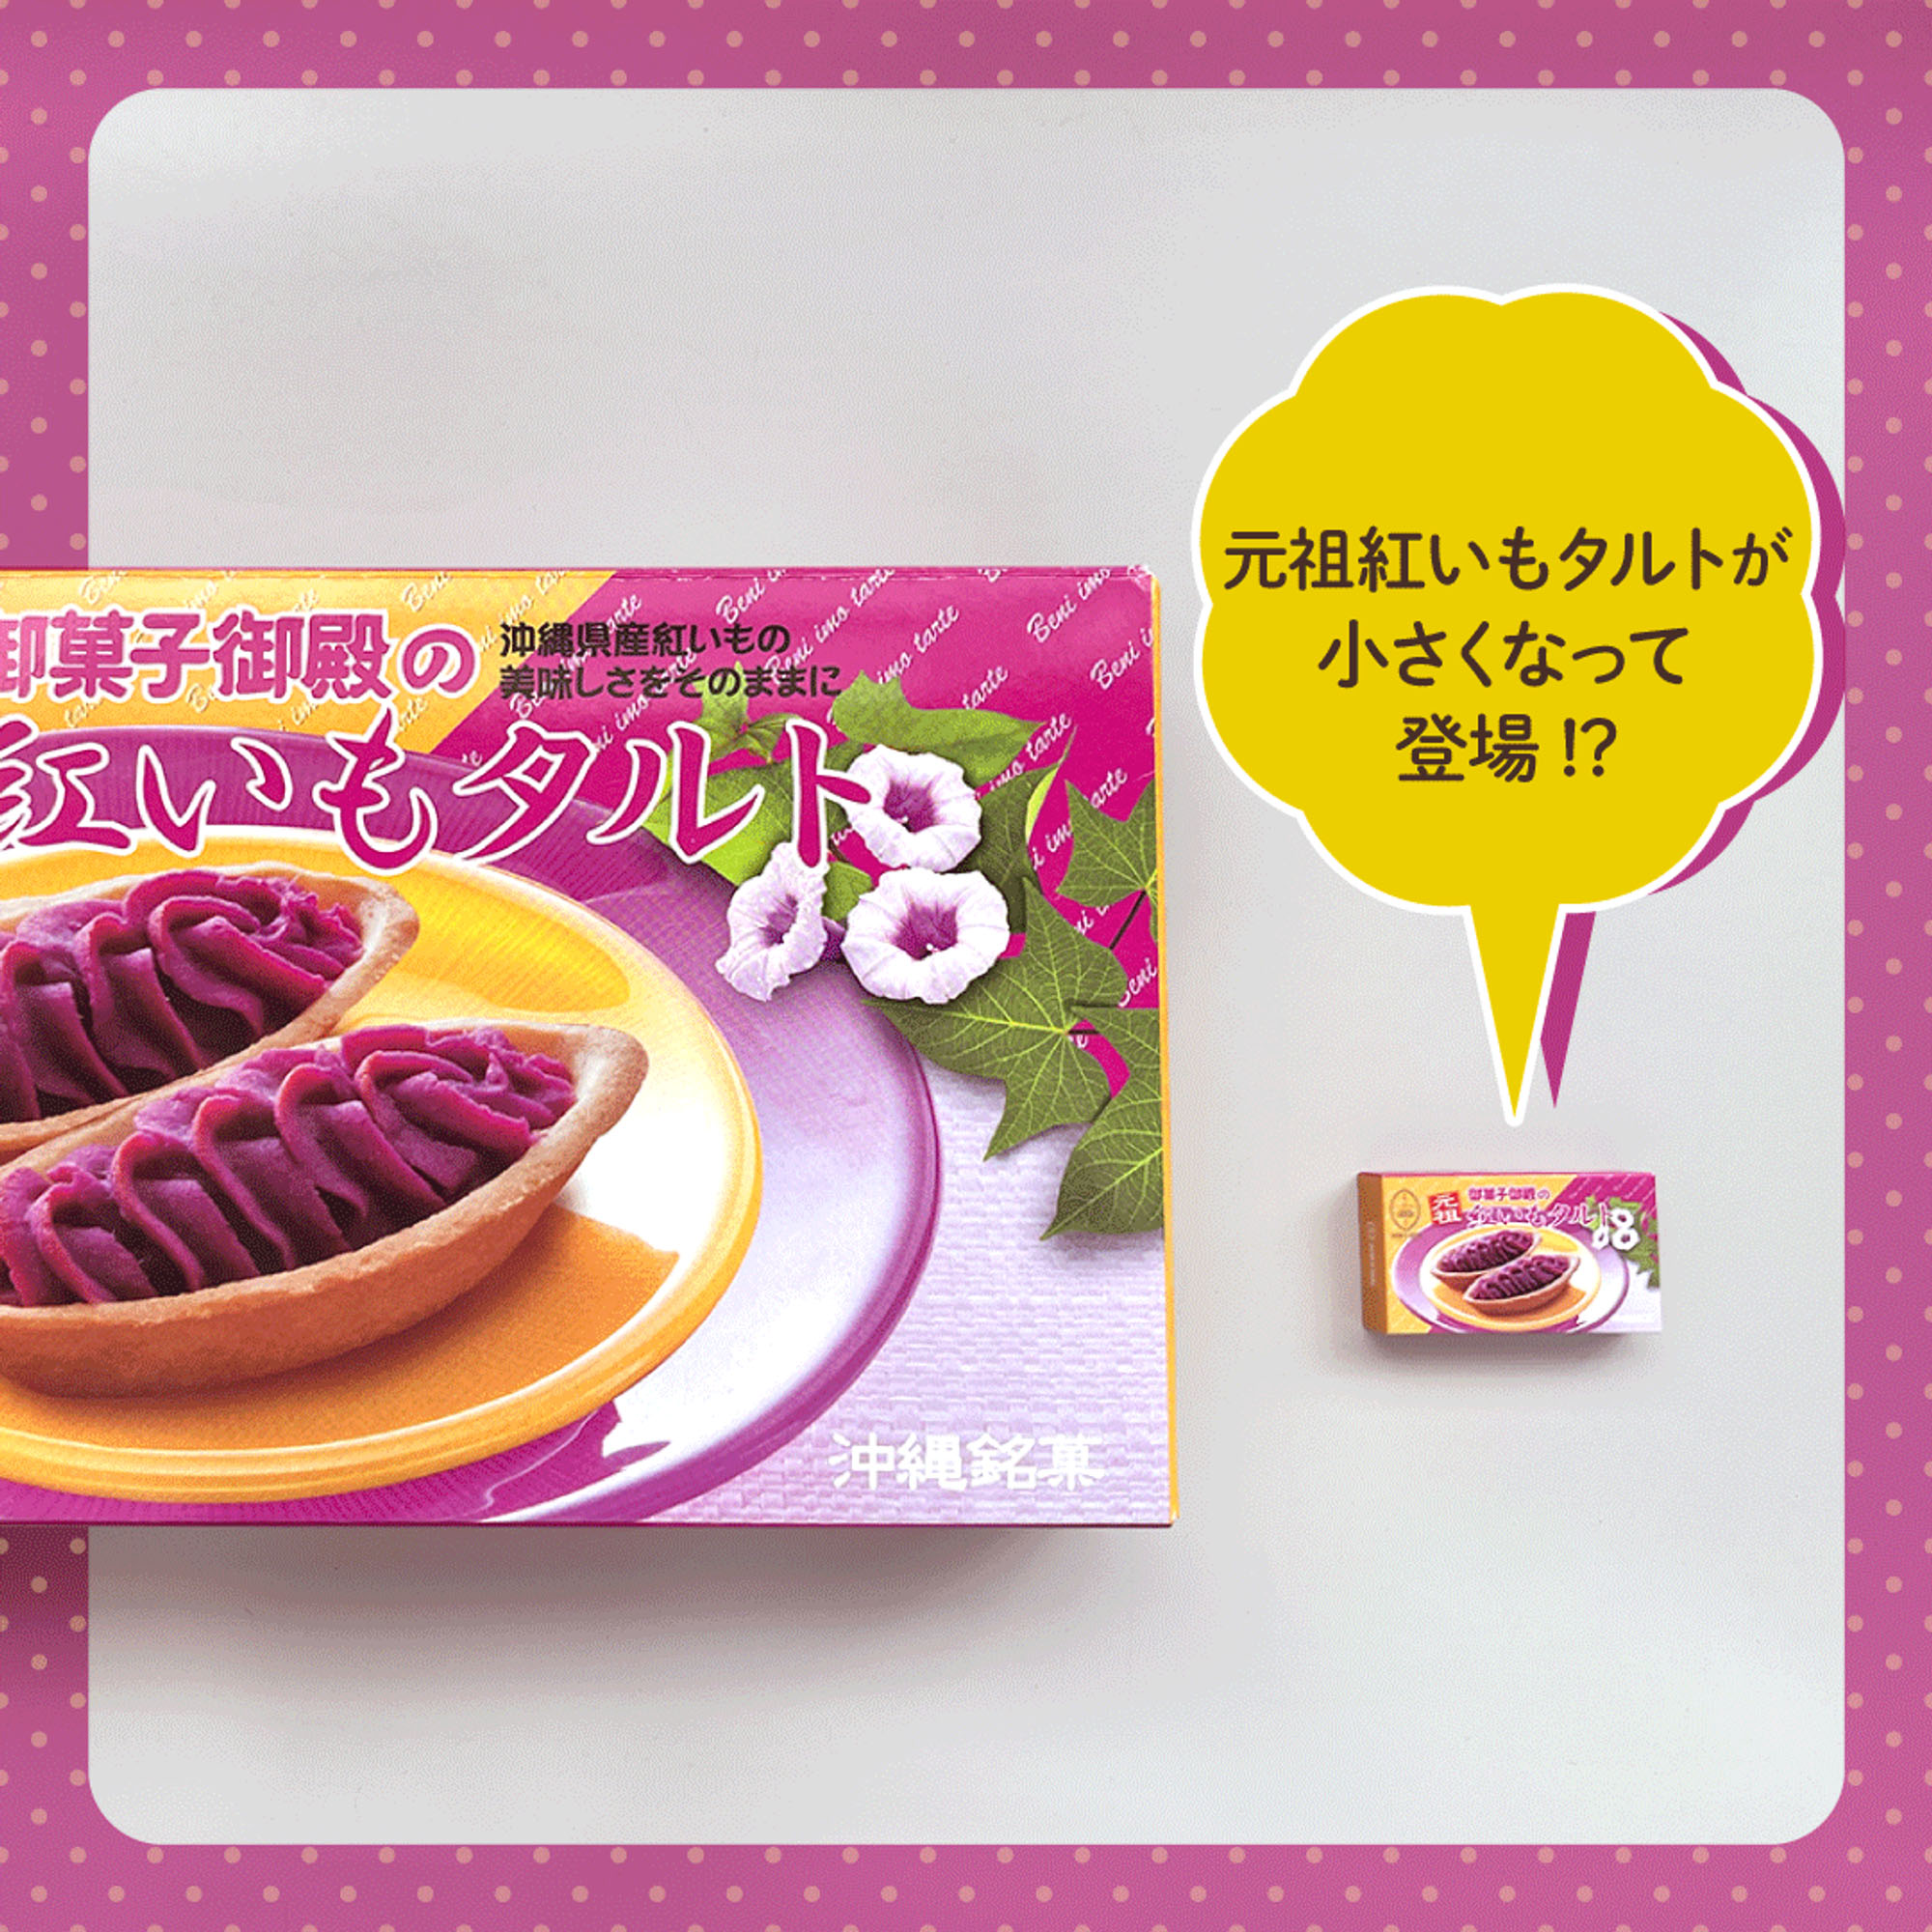 \The original red sweet potato tart has become a miniature!?/